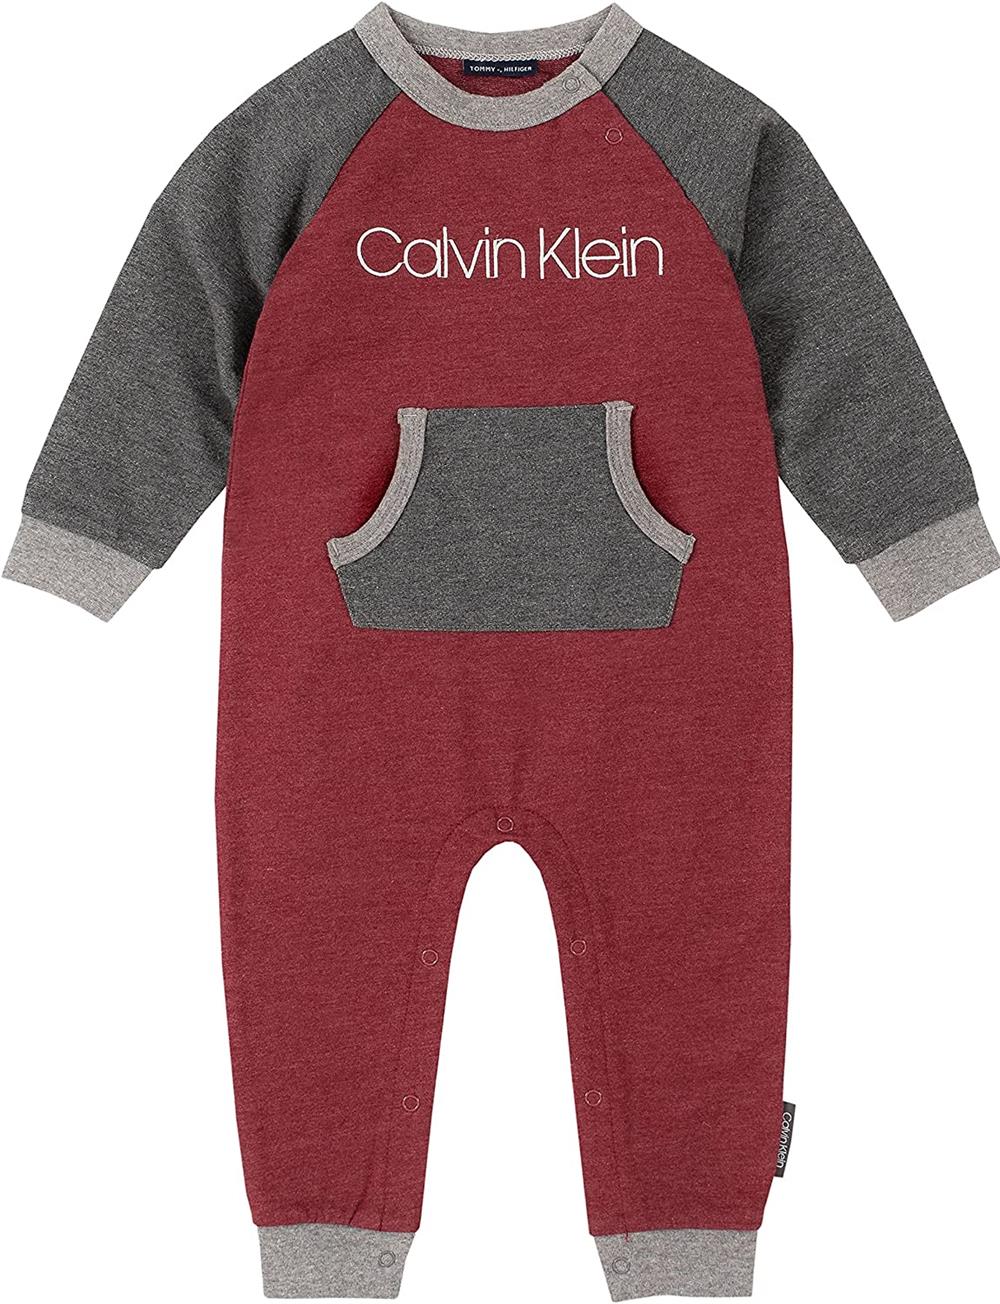 Calvin Klein Boys 12-24 Months Raglan Coverall